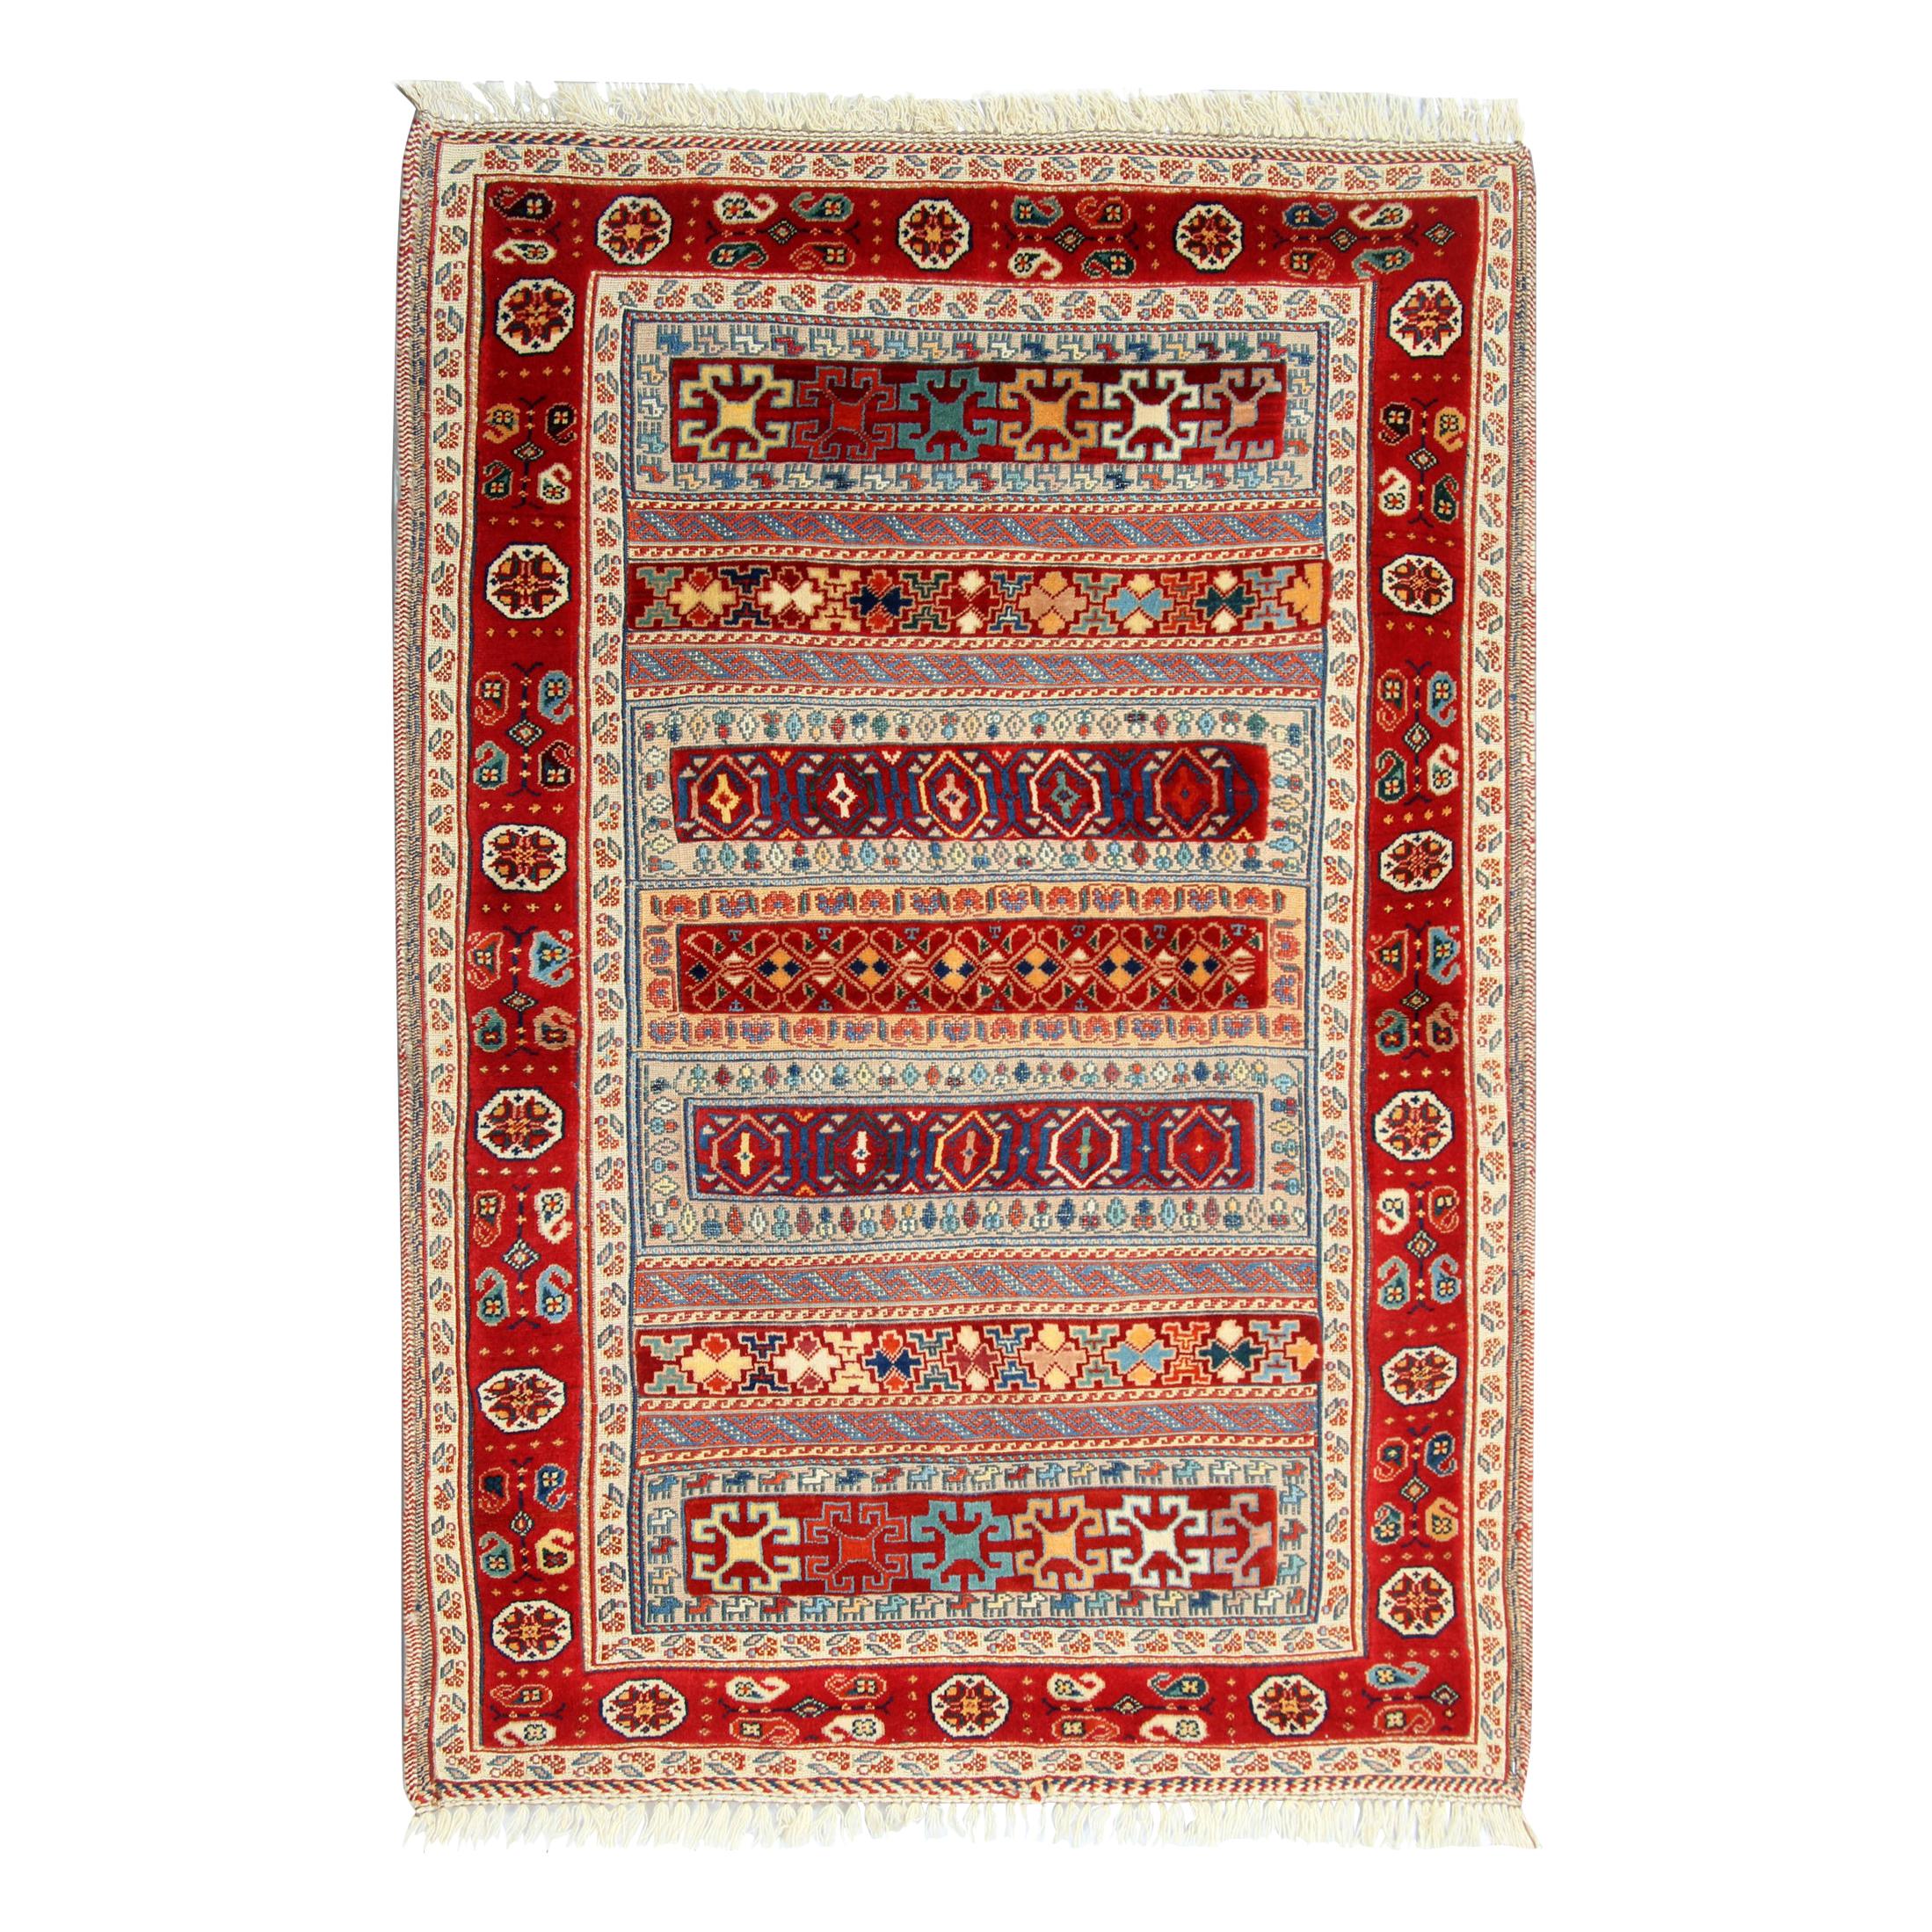 Tapis traditionnel Kilim en laine, tapis Kilim Sumakh tissé à la main